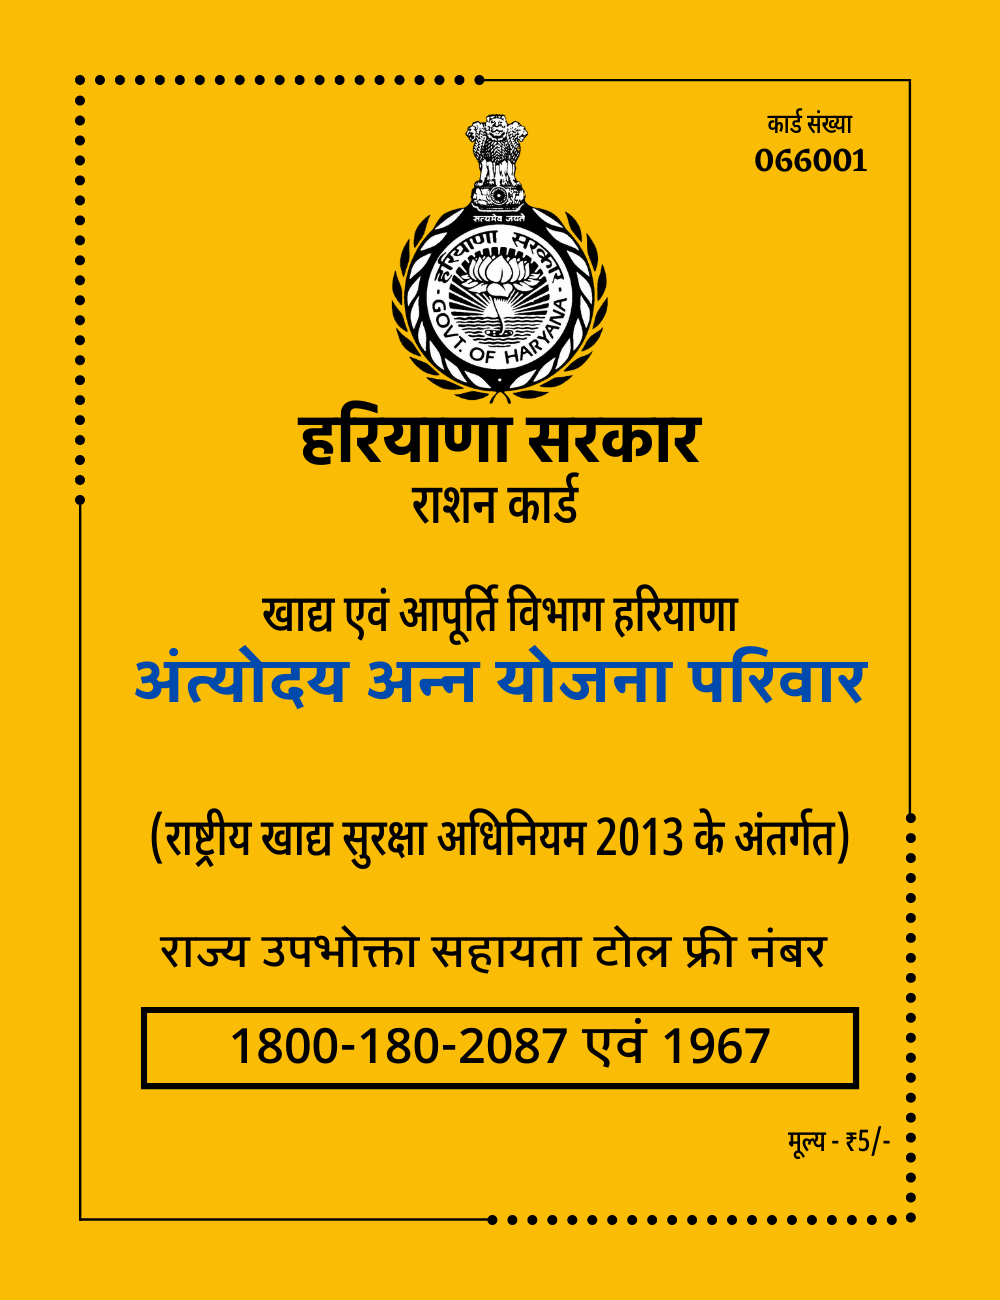 haryana ration card image